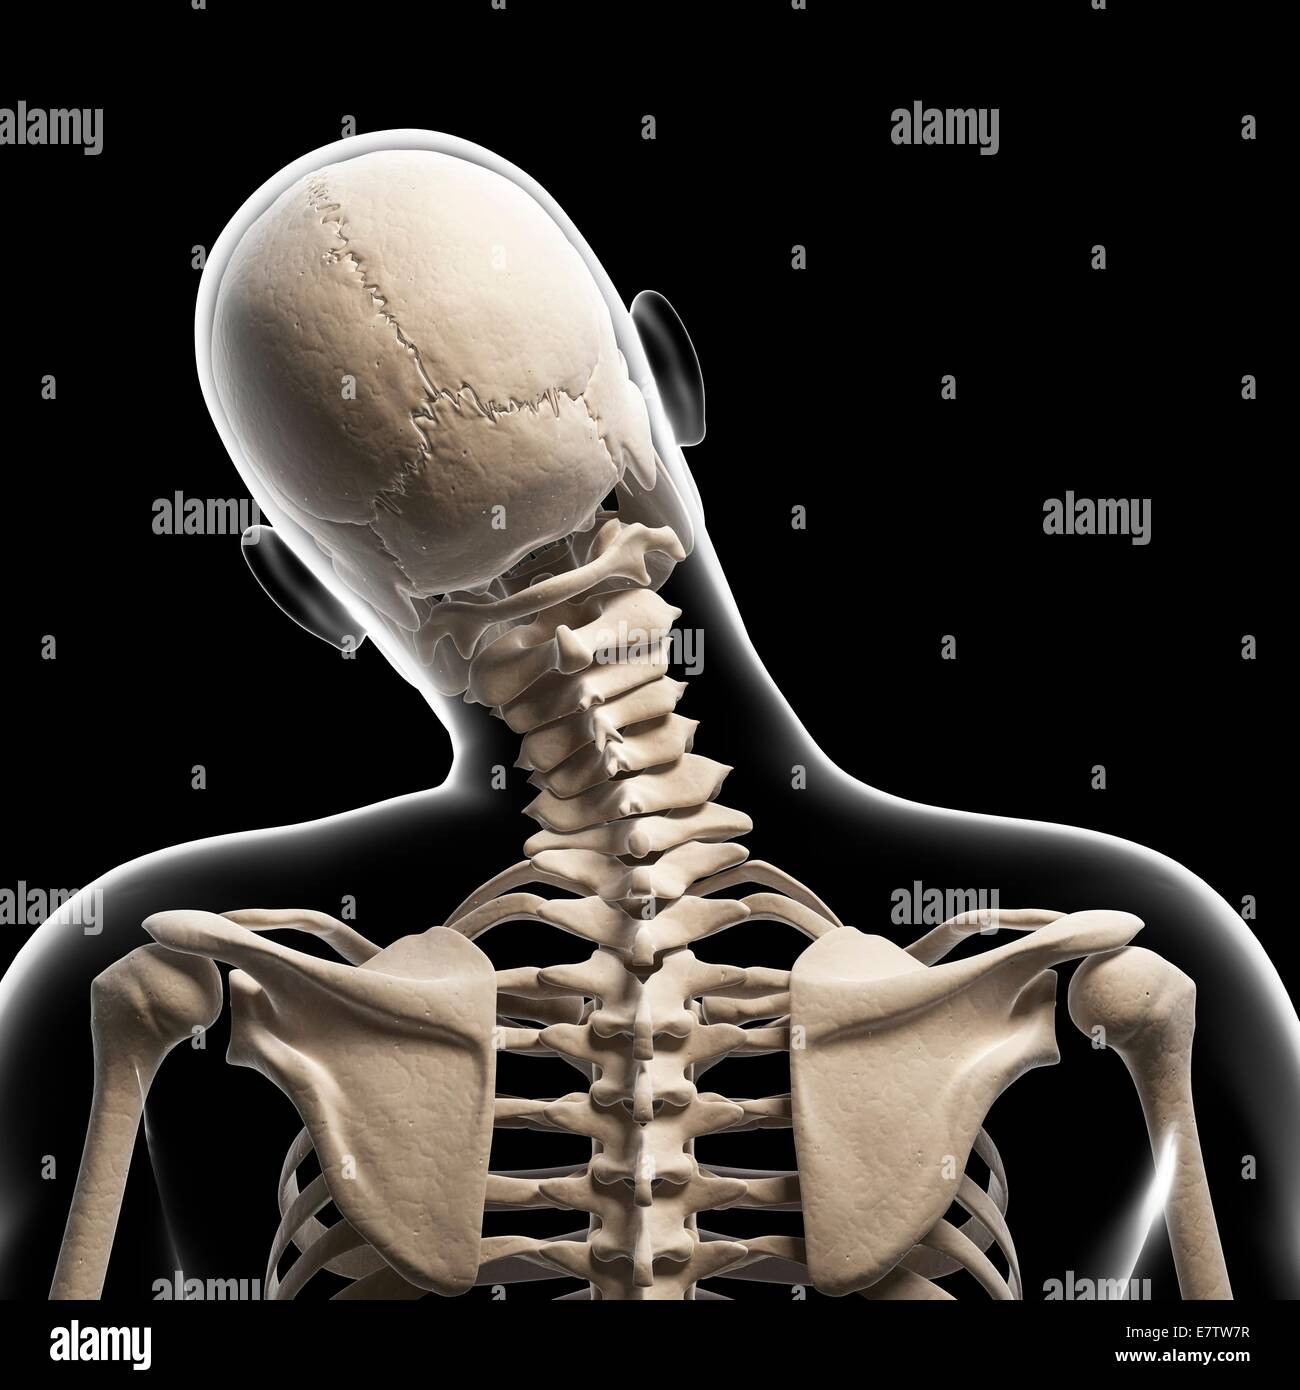 Human skull and neck bones, computer artwork Stock Photo - Alamy